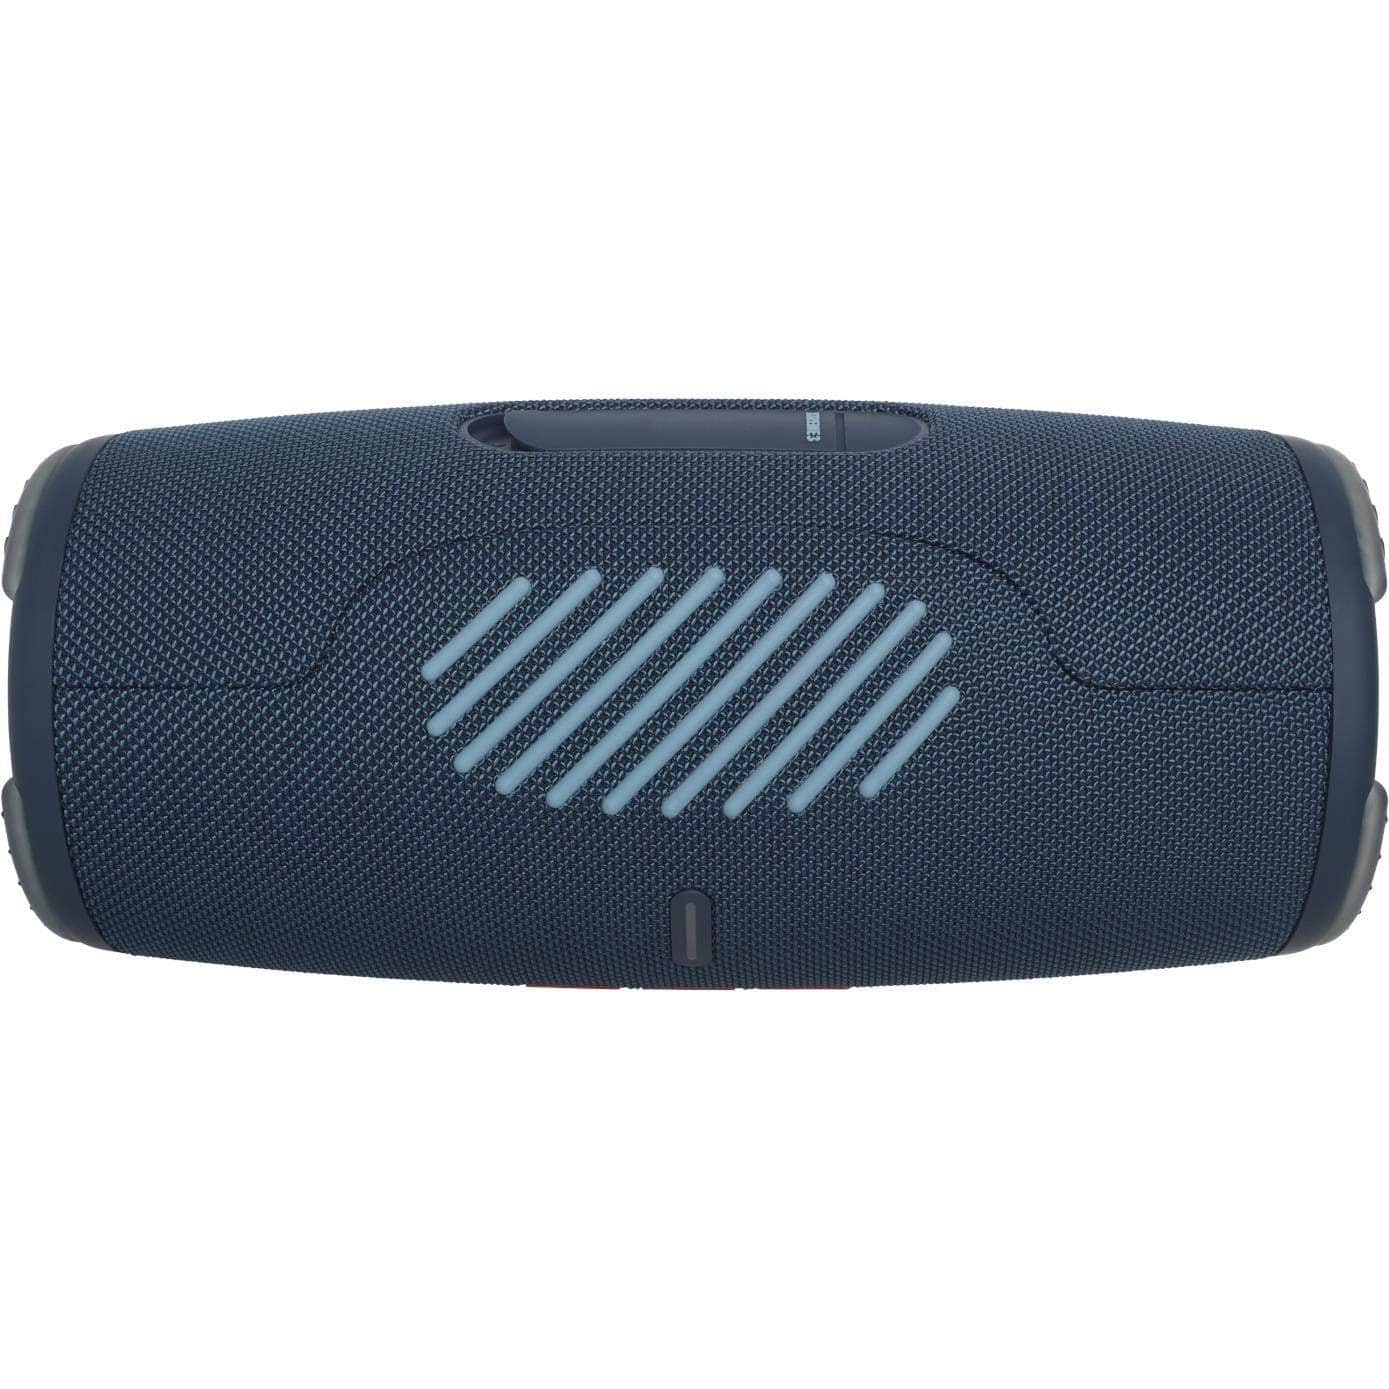 JBL Xtreme 3 Portable Bluetooth Speaker Blue/Black